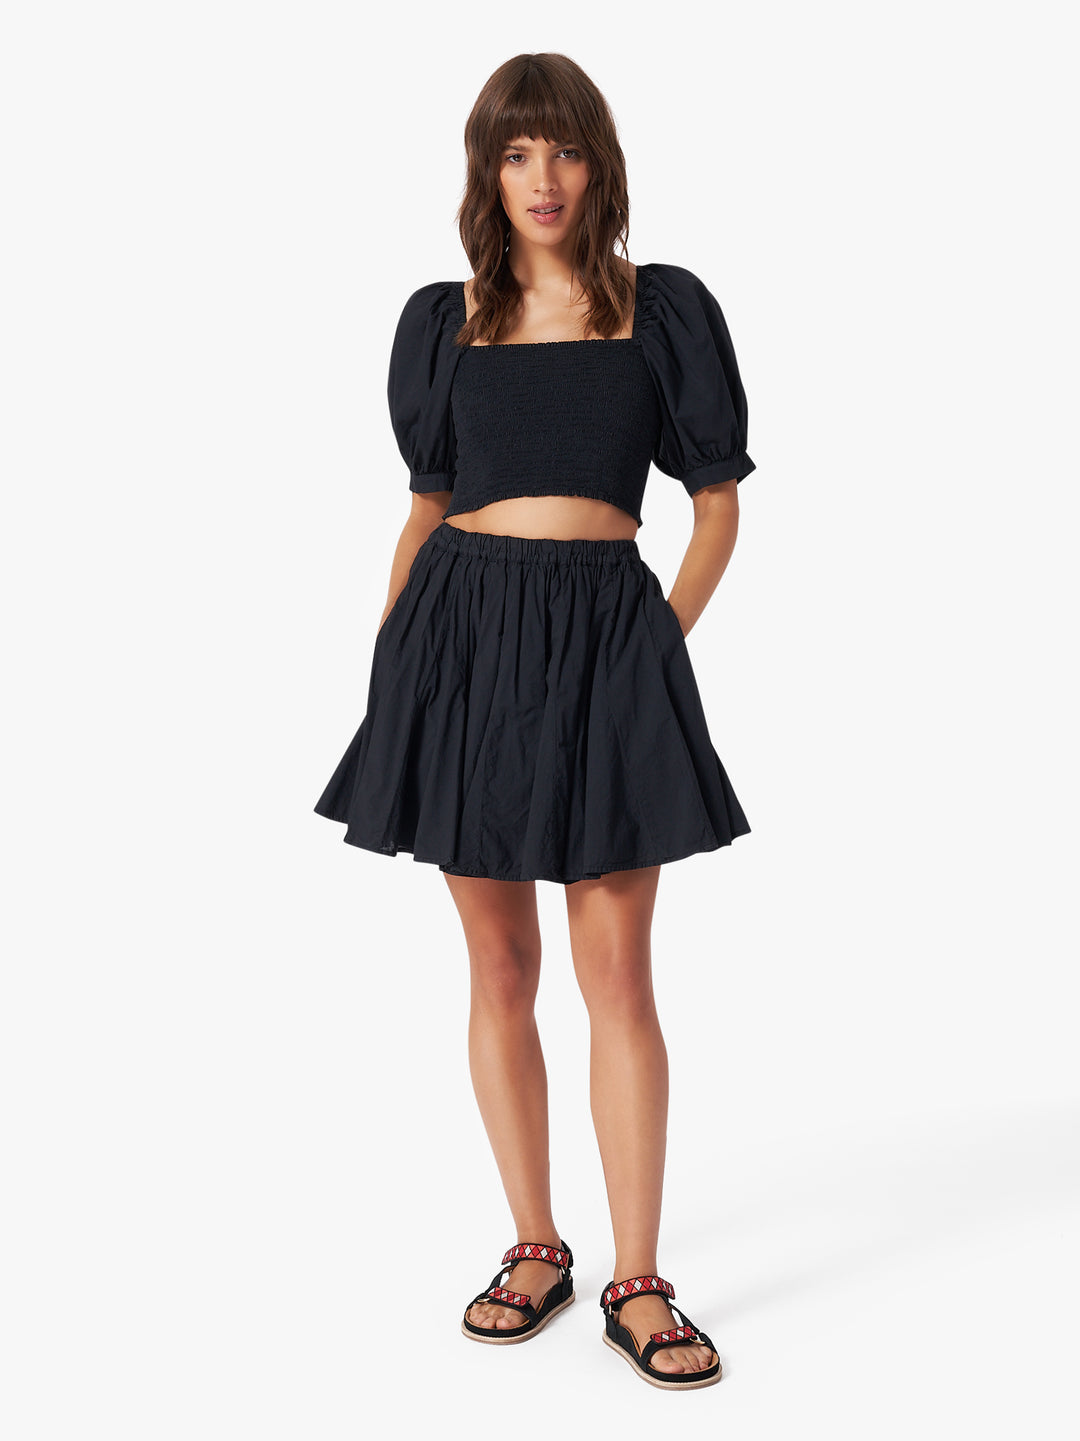 Xirena - Cassidy Skirt in Black